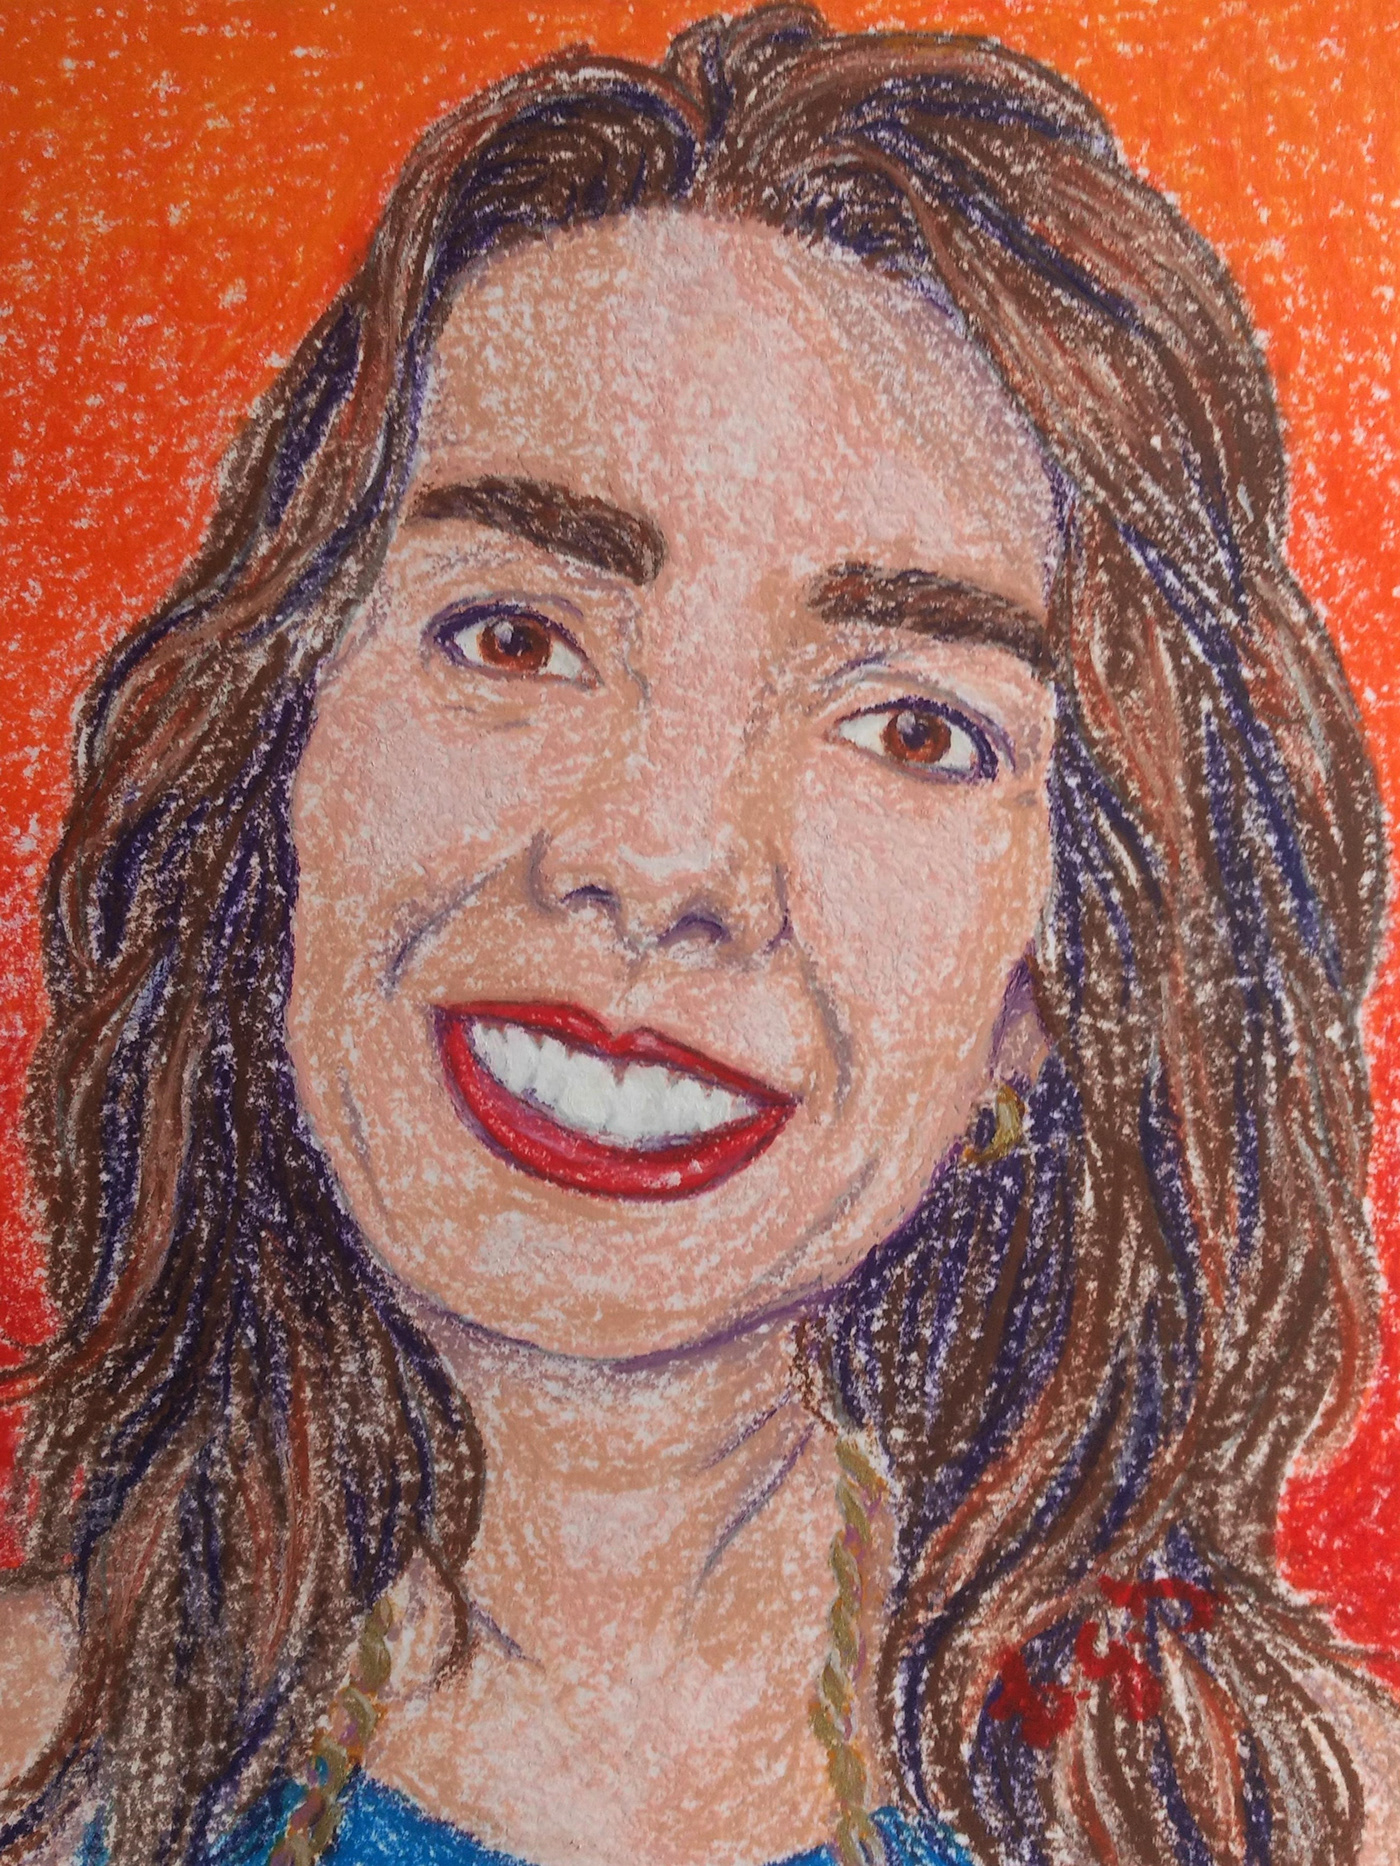 retrato portrait oil pastels pastel oleoso desenho Ilustração Drawing  illustratoin